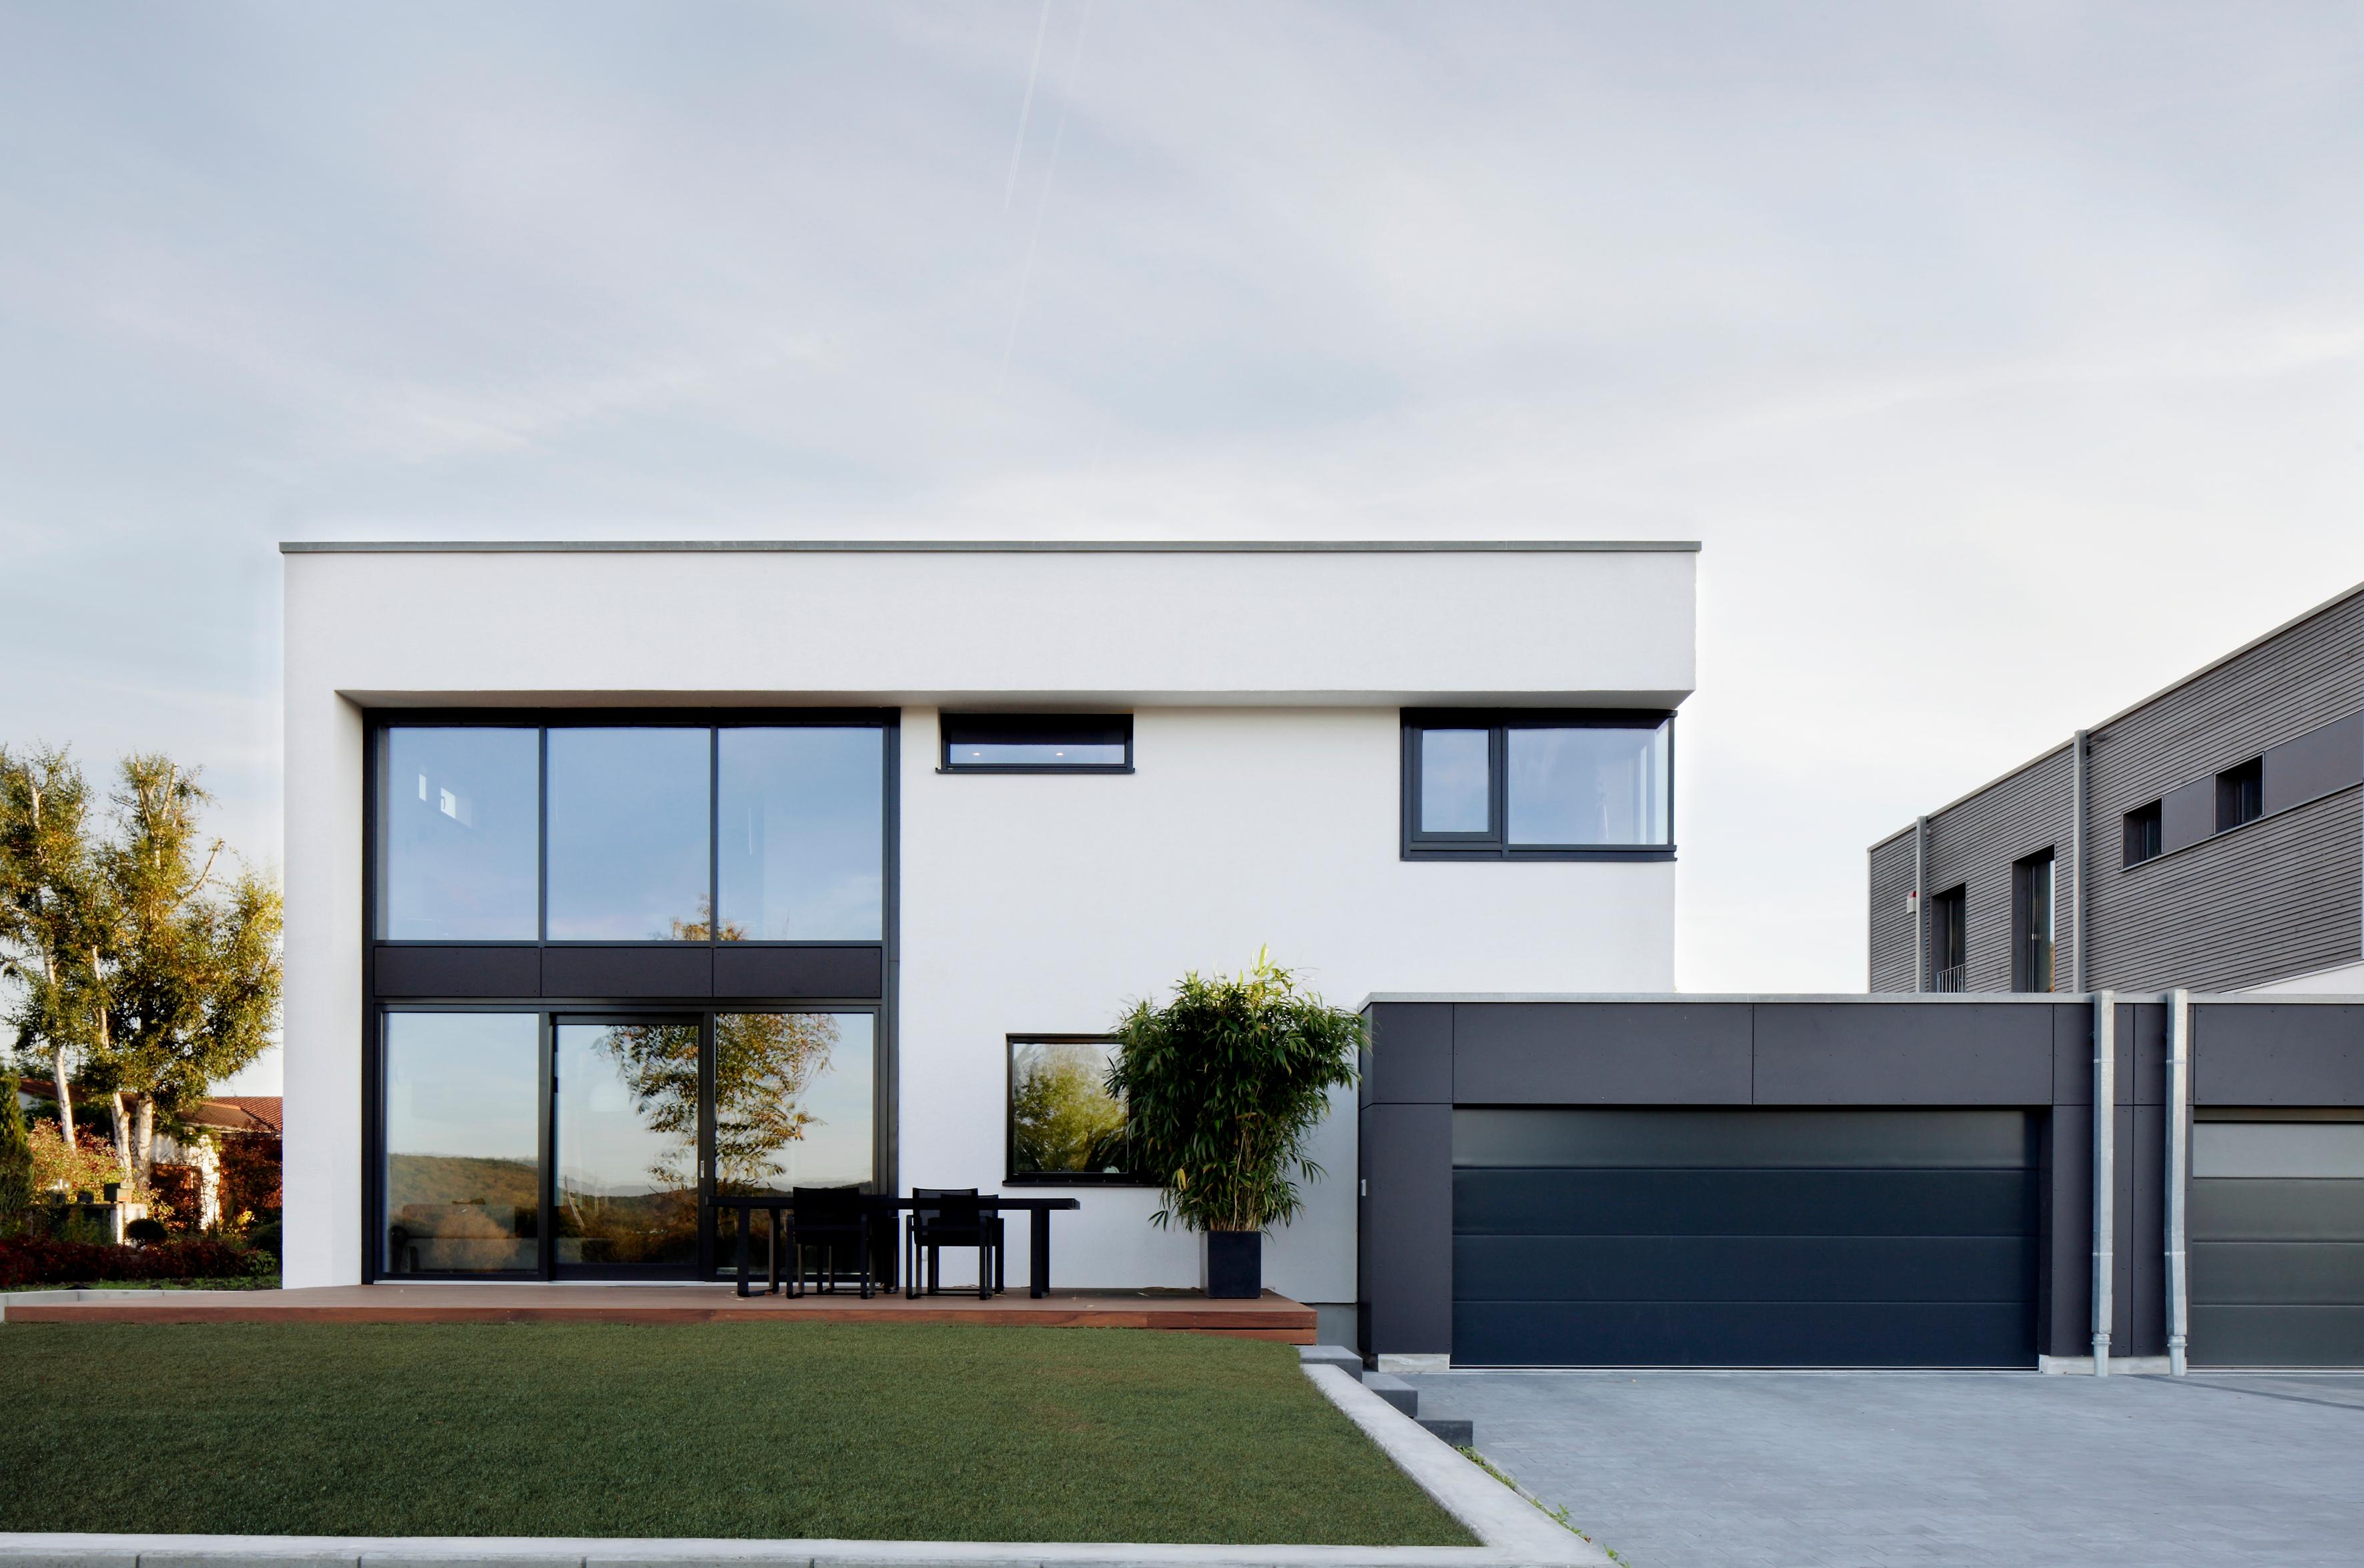 Haus Nilles #flachdach #garage #hausgestaltung ©Baufritz GmbH & Co. KG